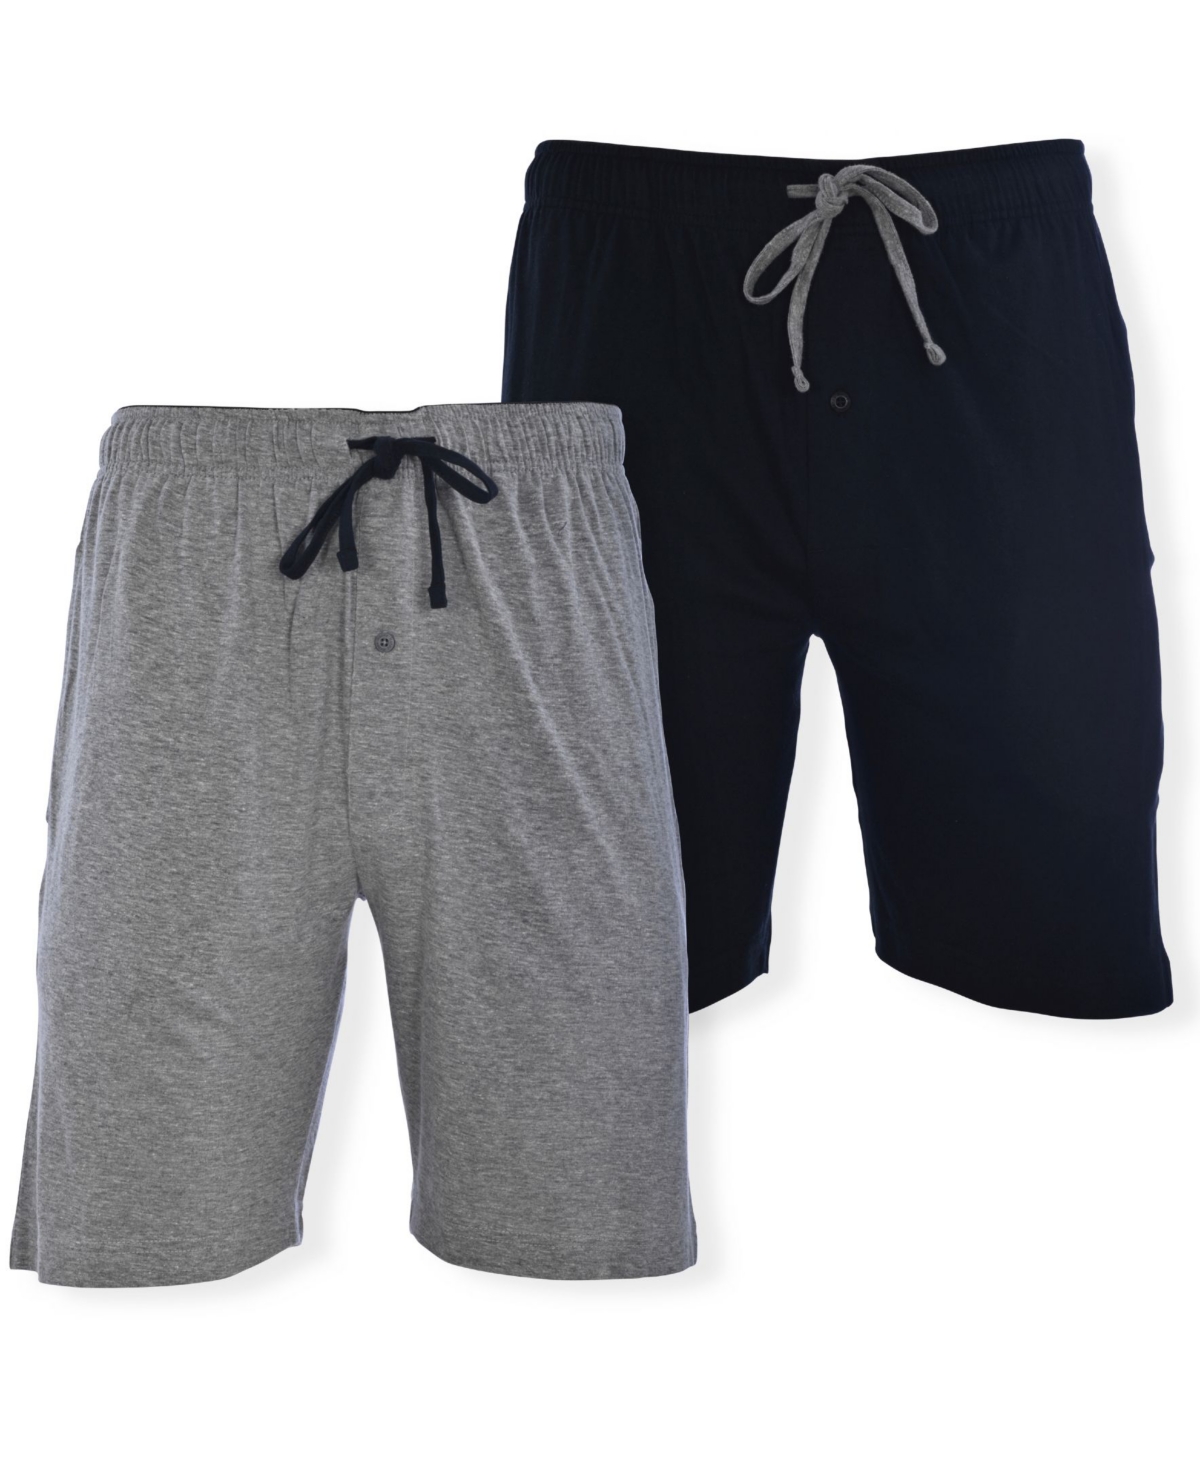 Hanes Men's Knit Jam Shorts, Pack of 2